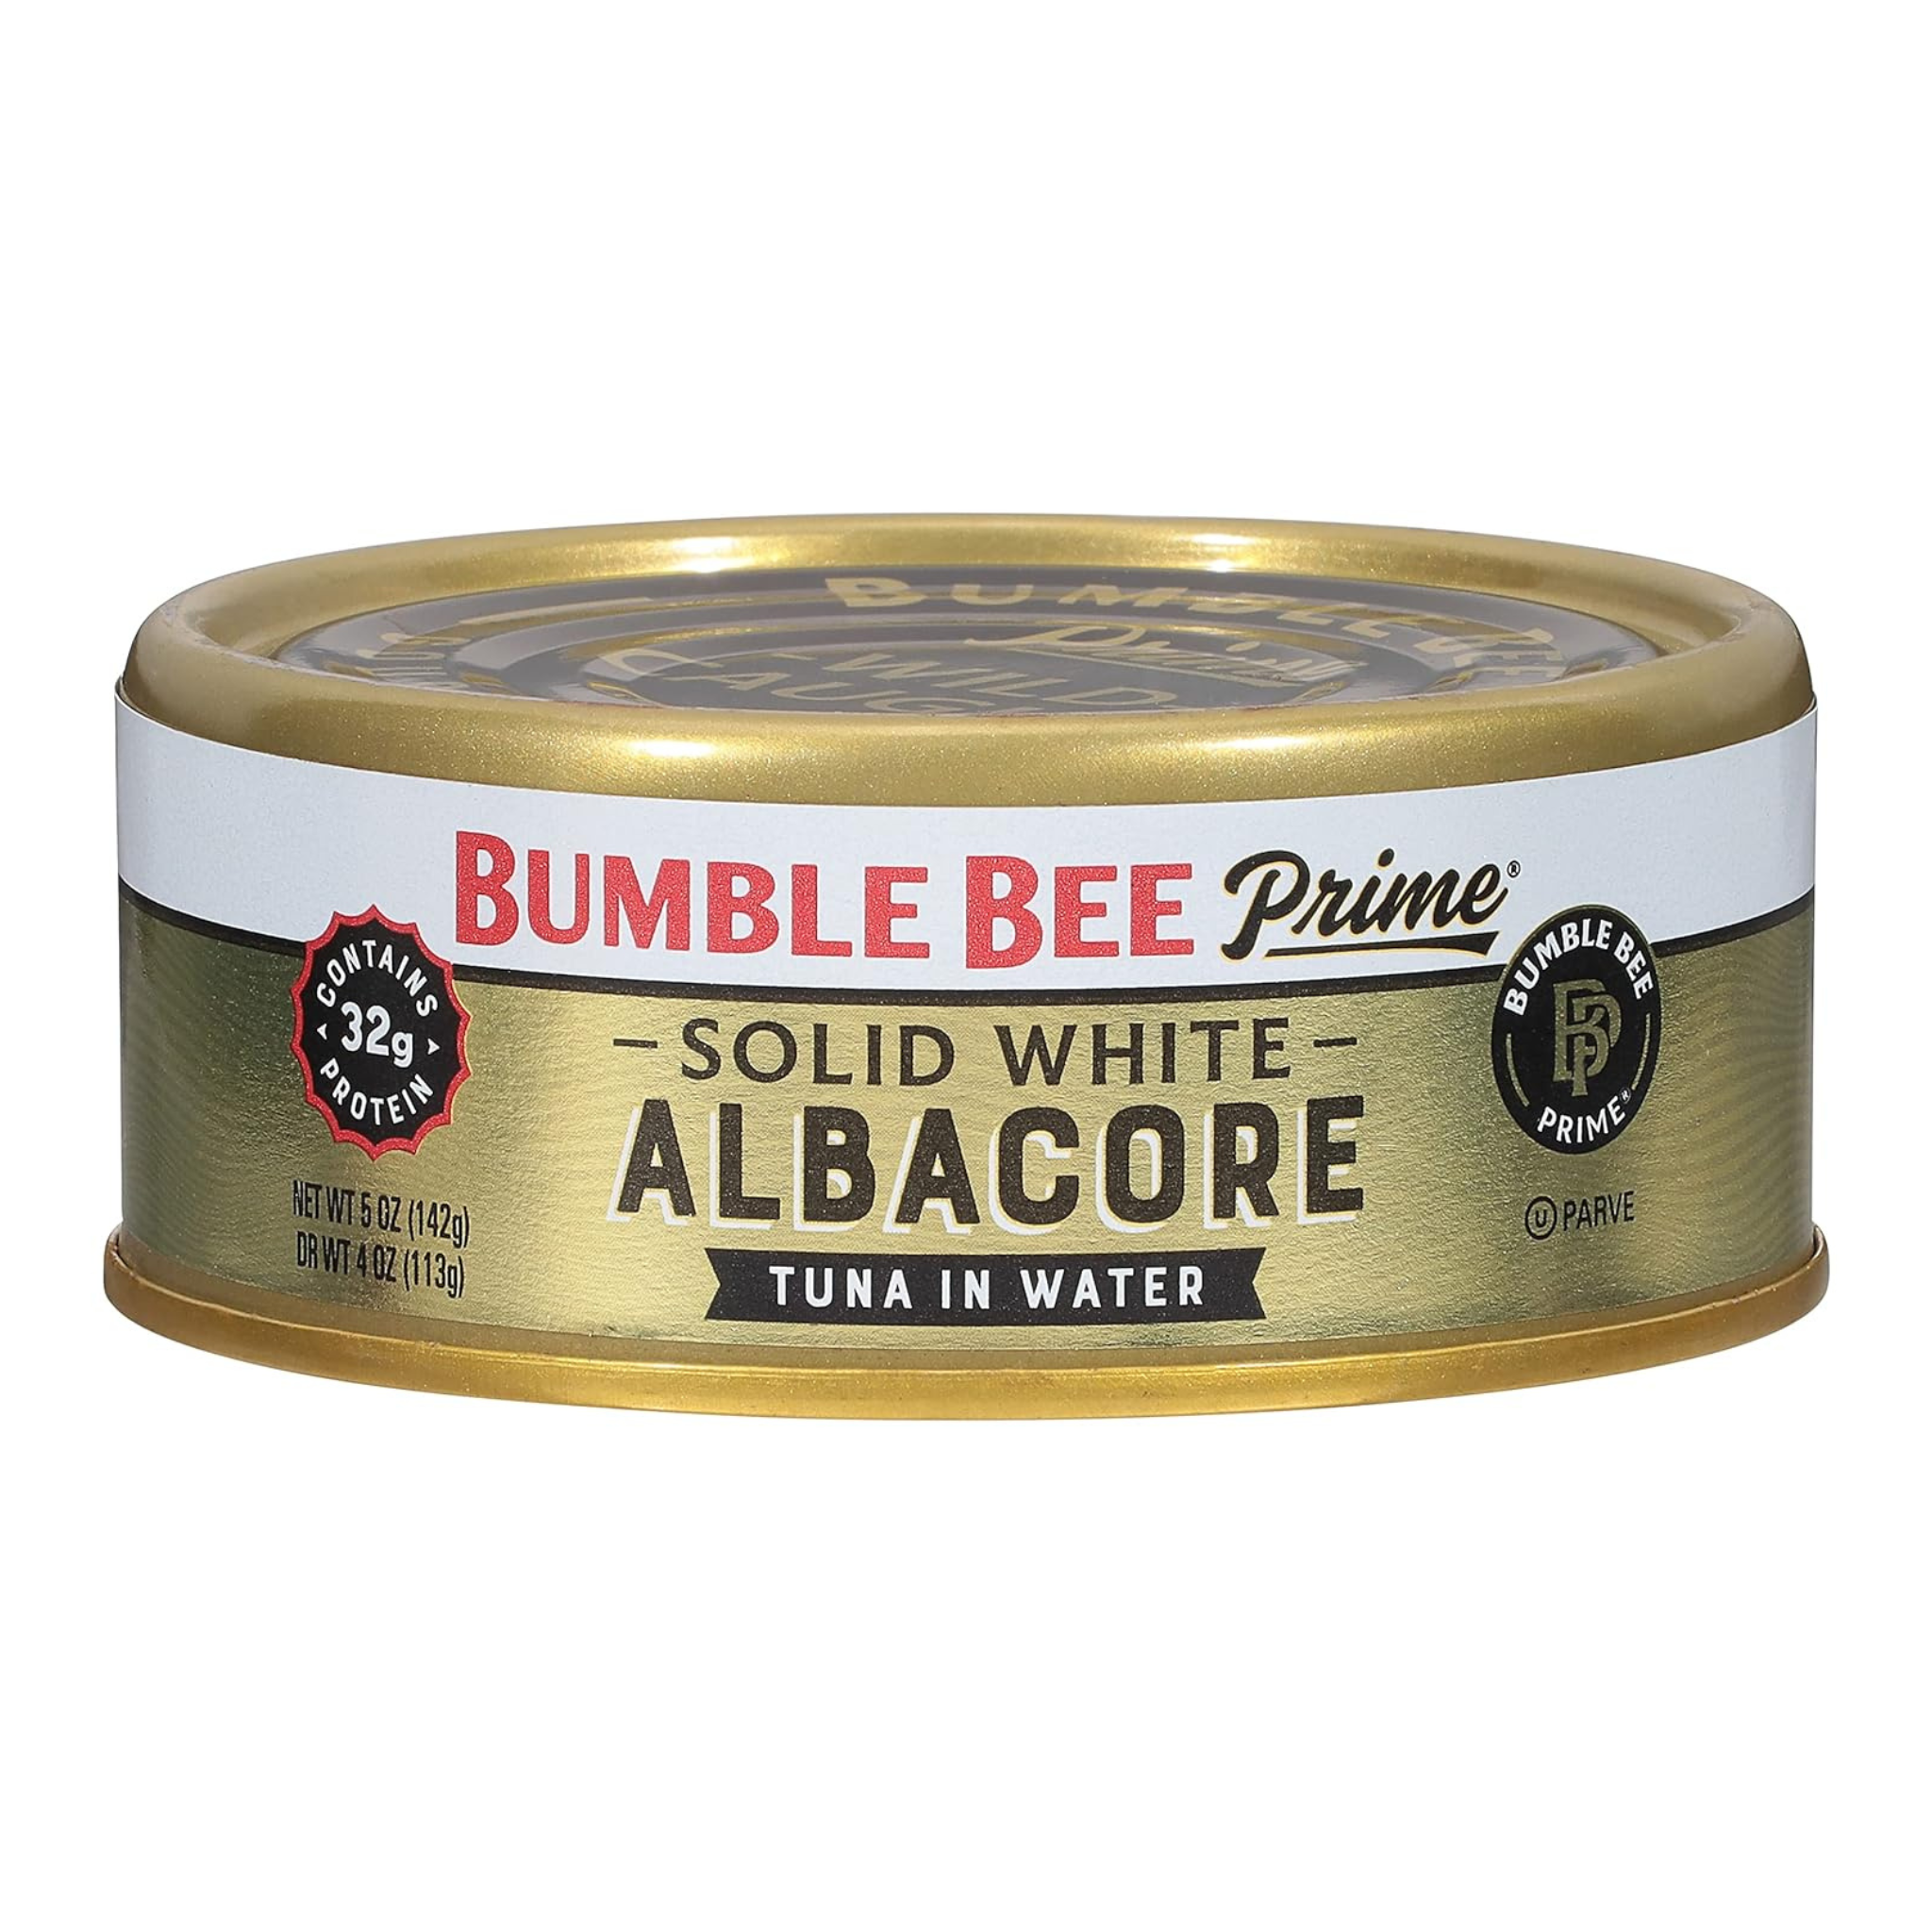 Bumble Bee Prime Fillet Solid White Albacore Tuna